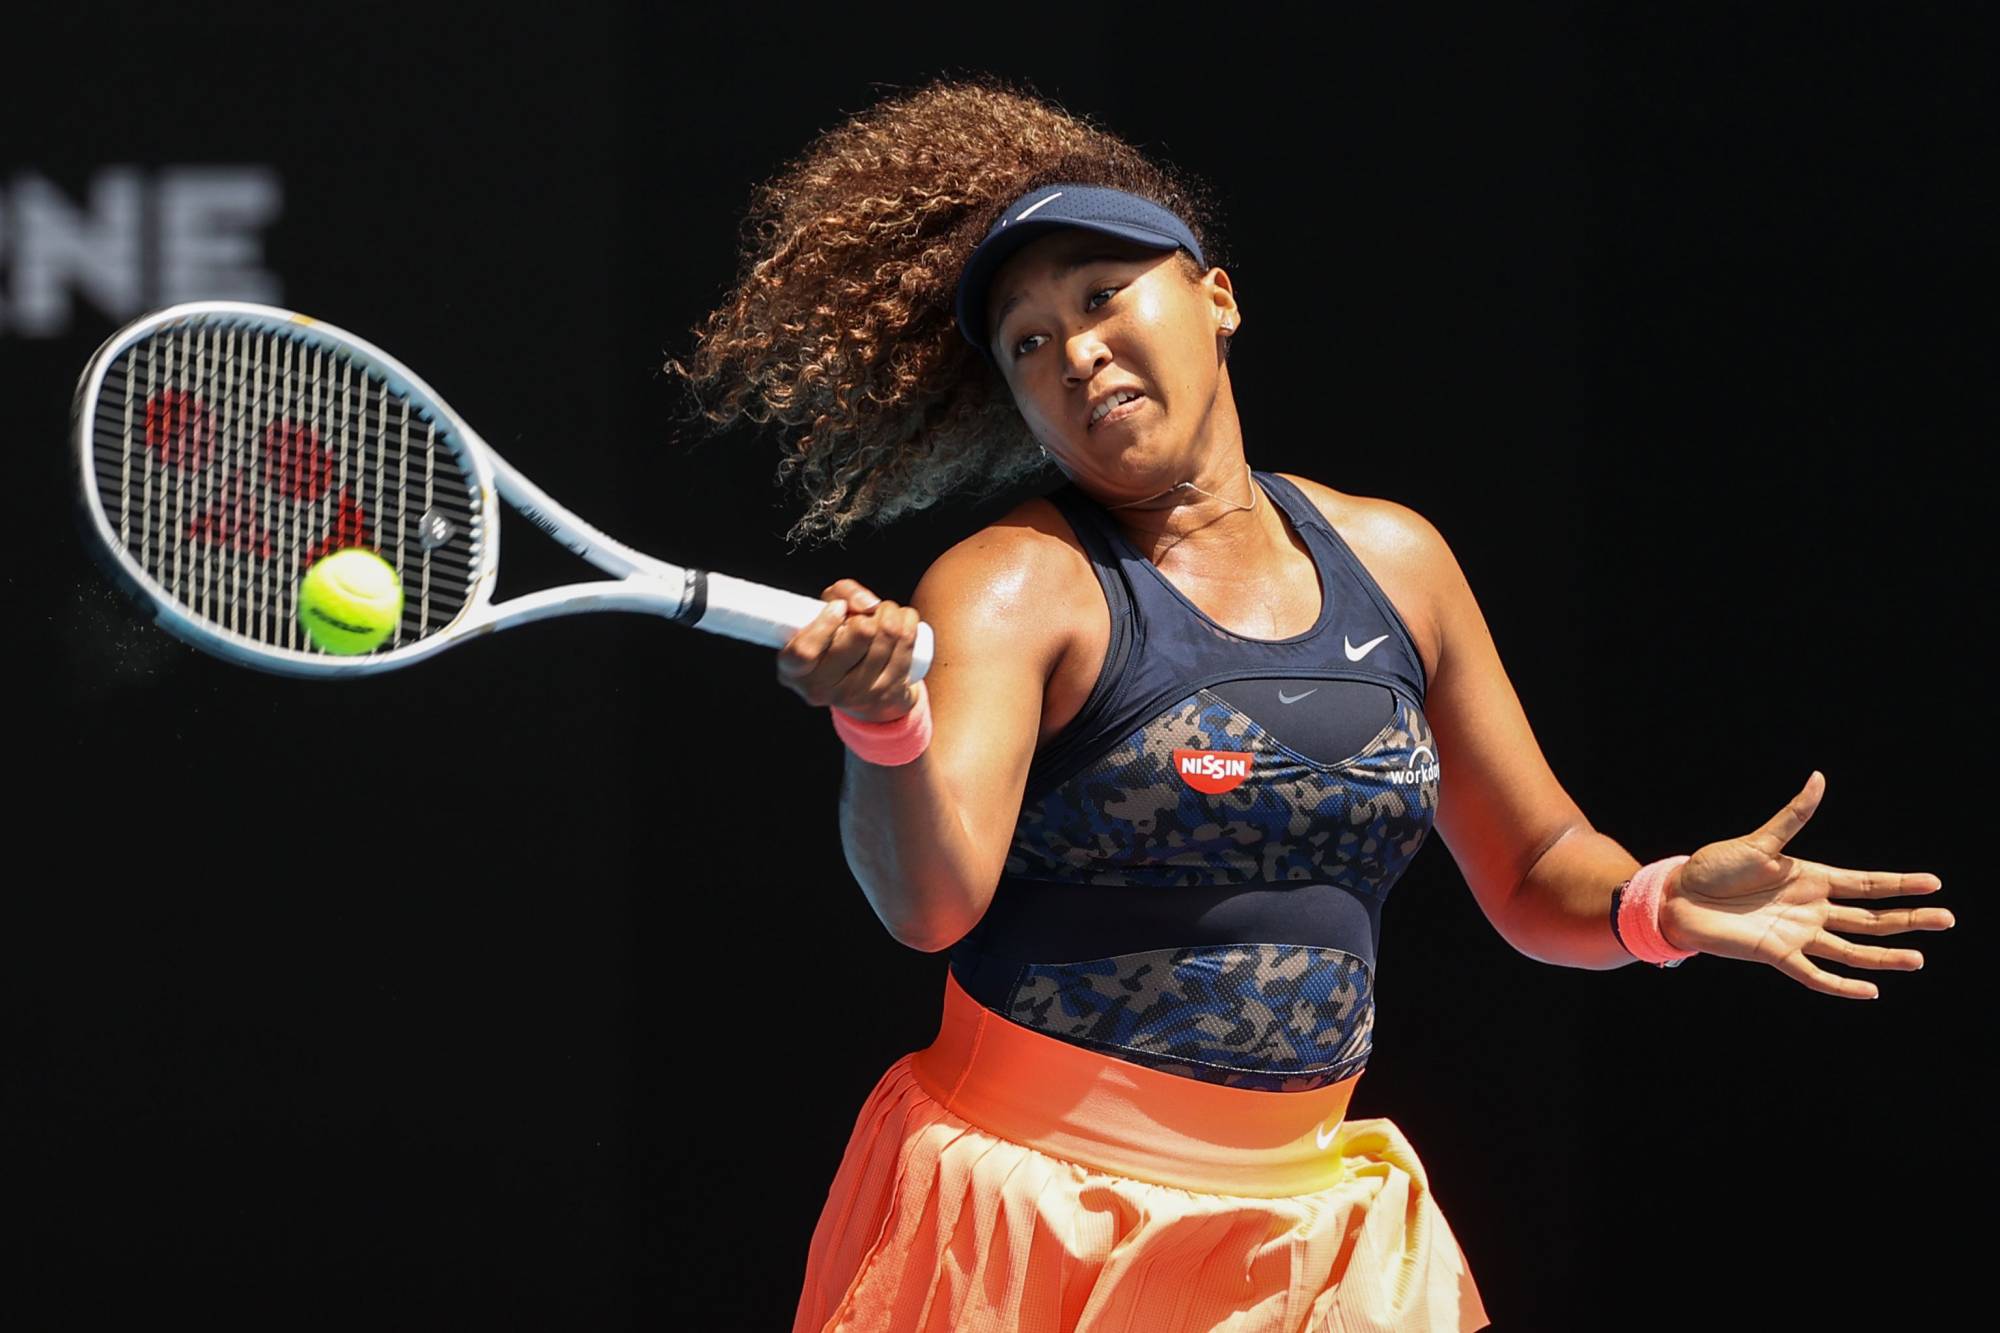 Naomi Osaka storms into Australian Open finals after beating Serena